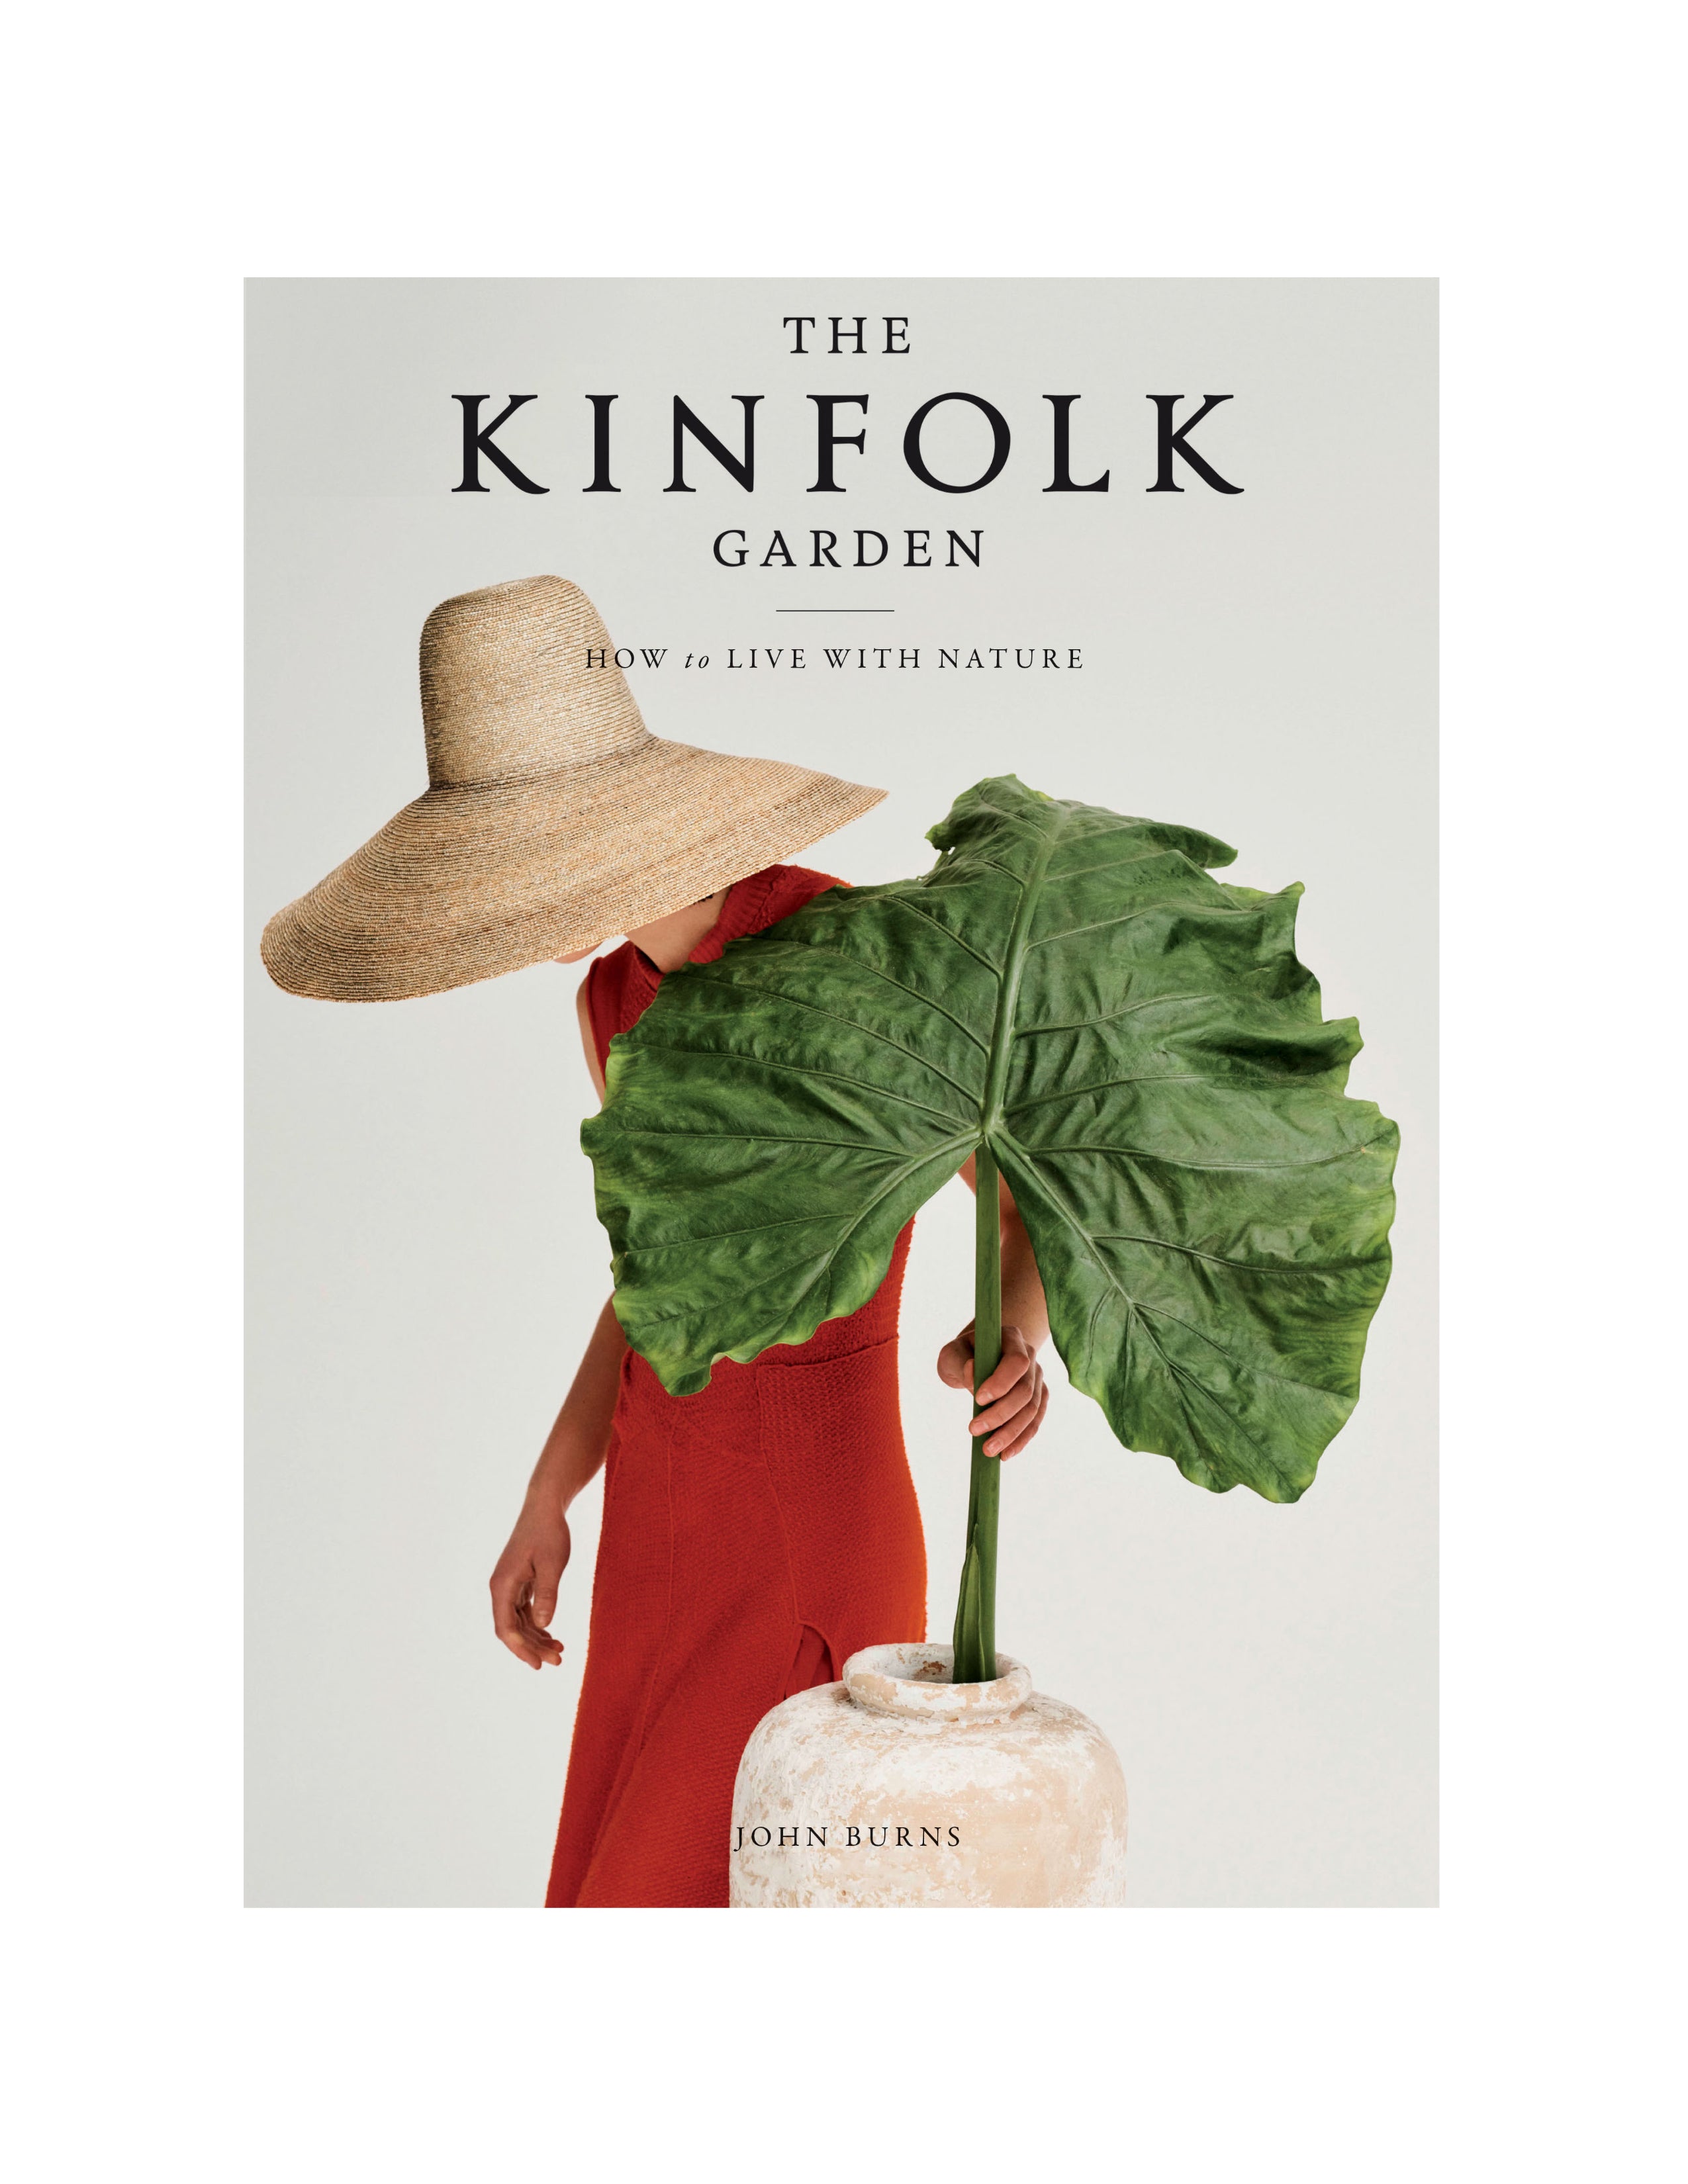 The Kinfolk Garden